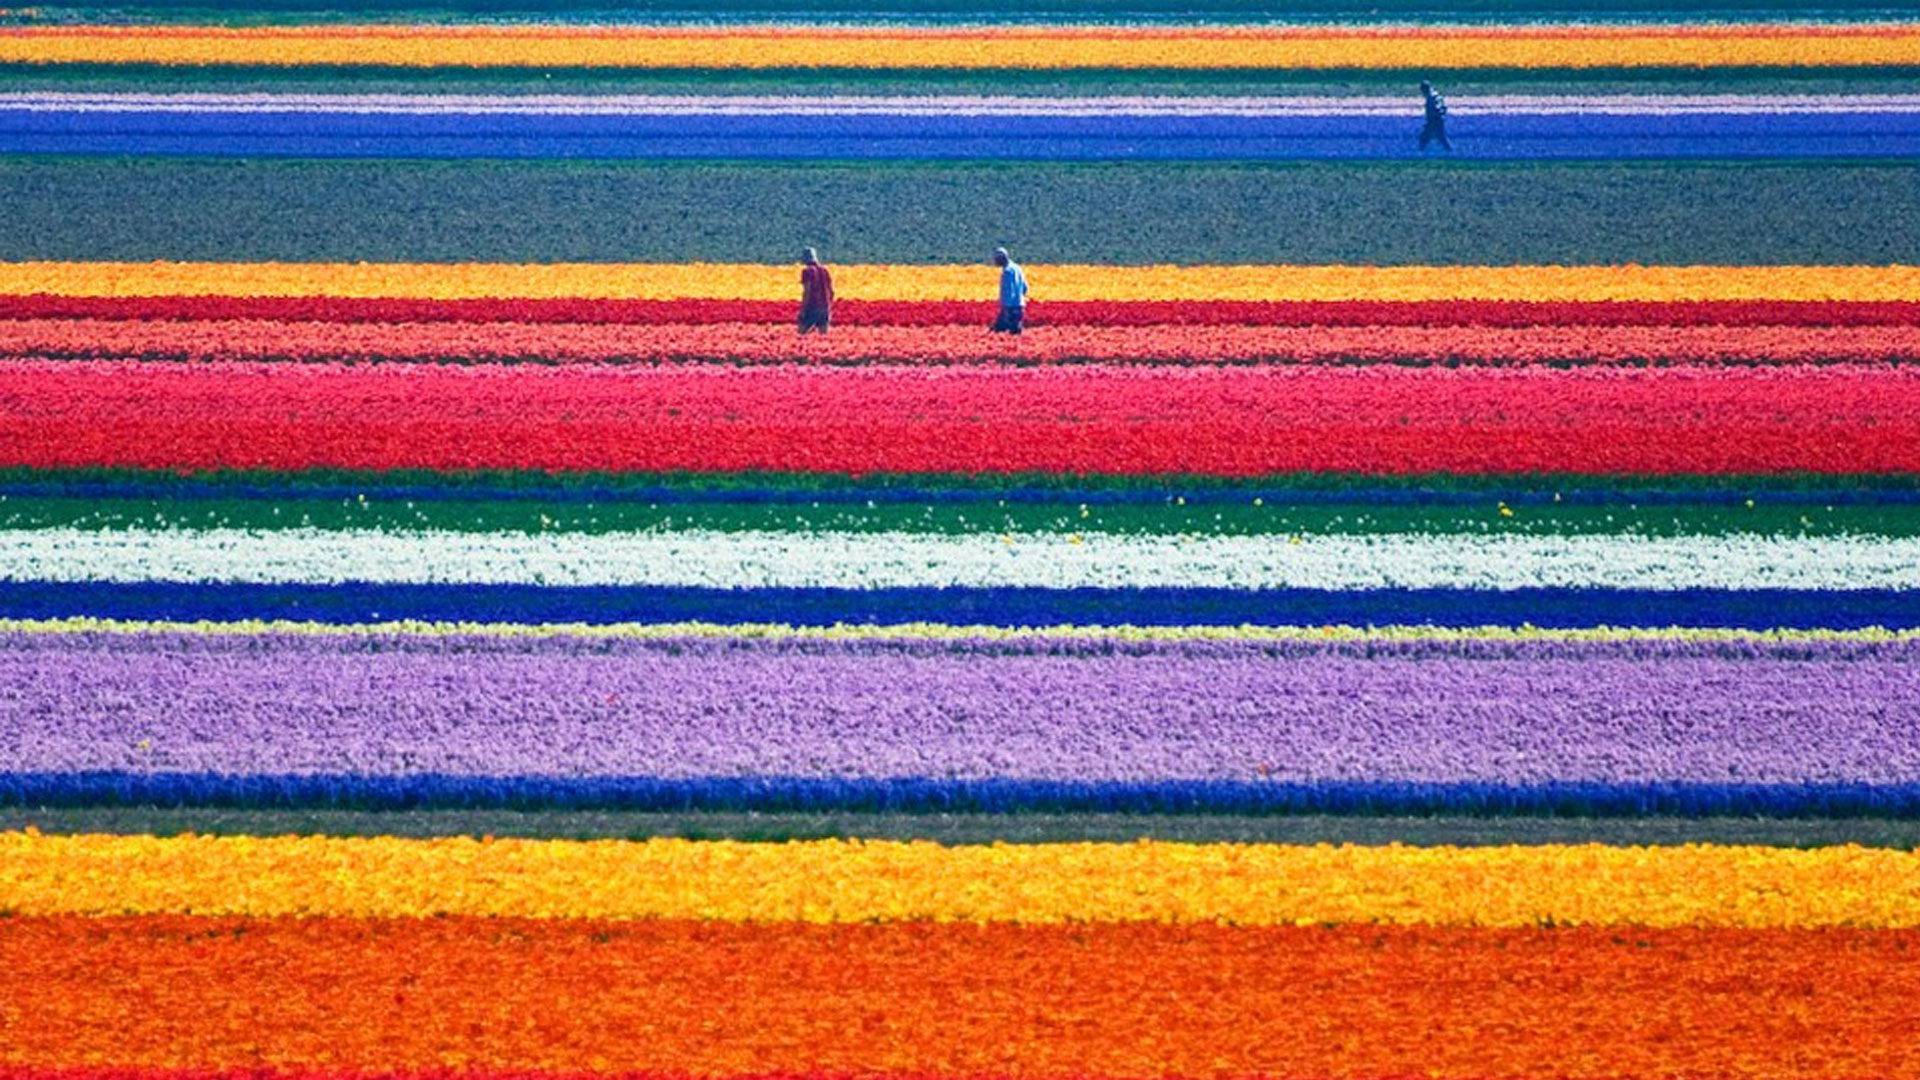 Amaizing Tulip Fields in the Netherlands